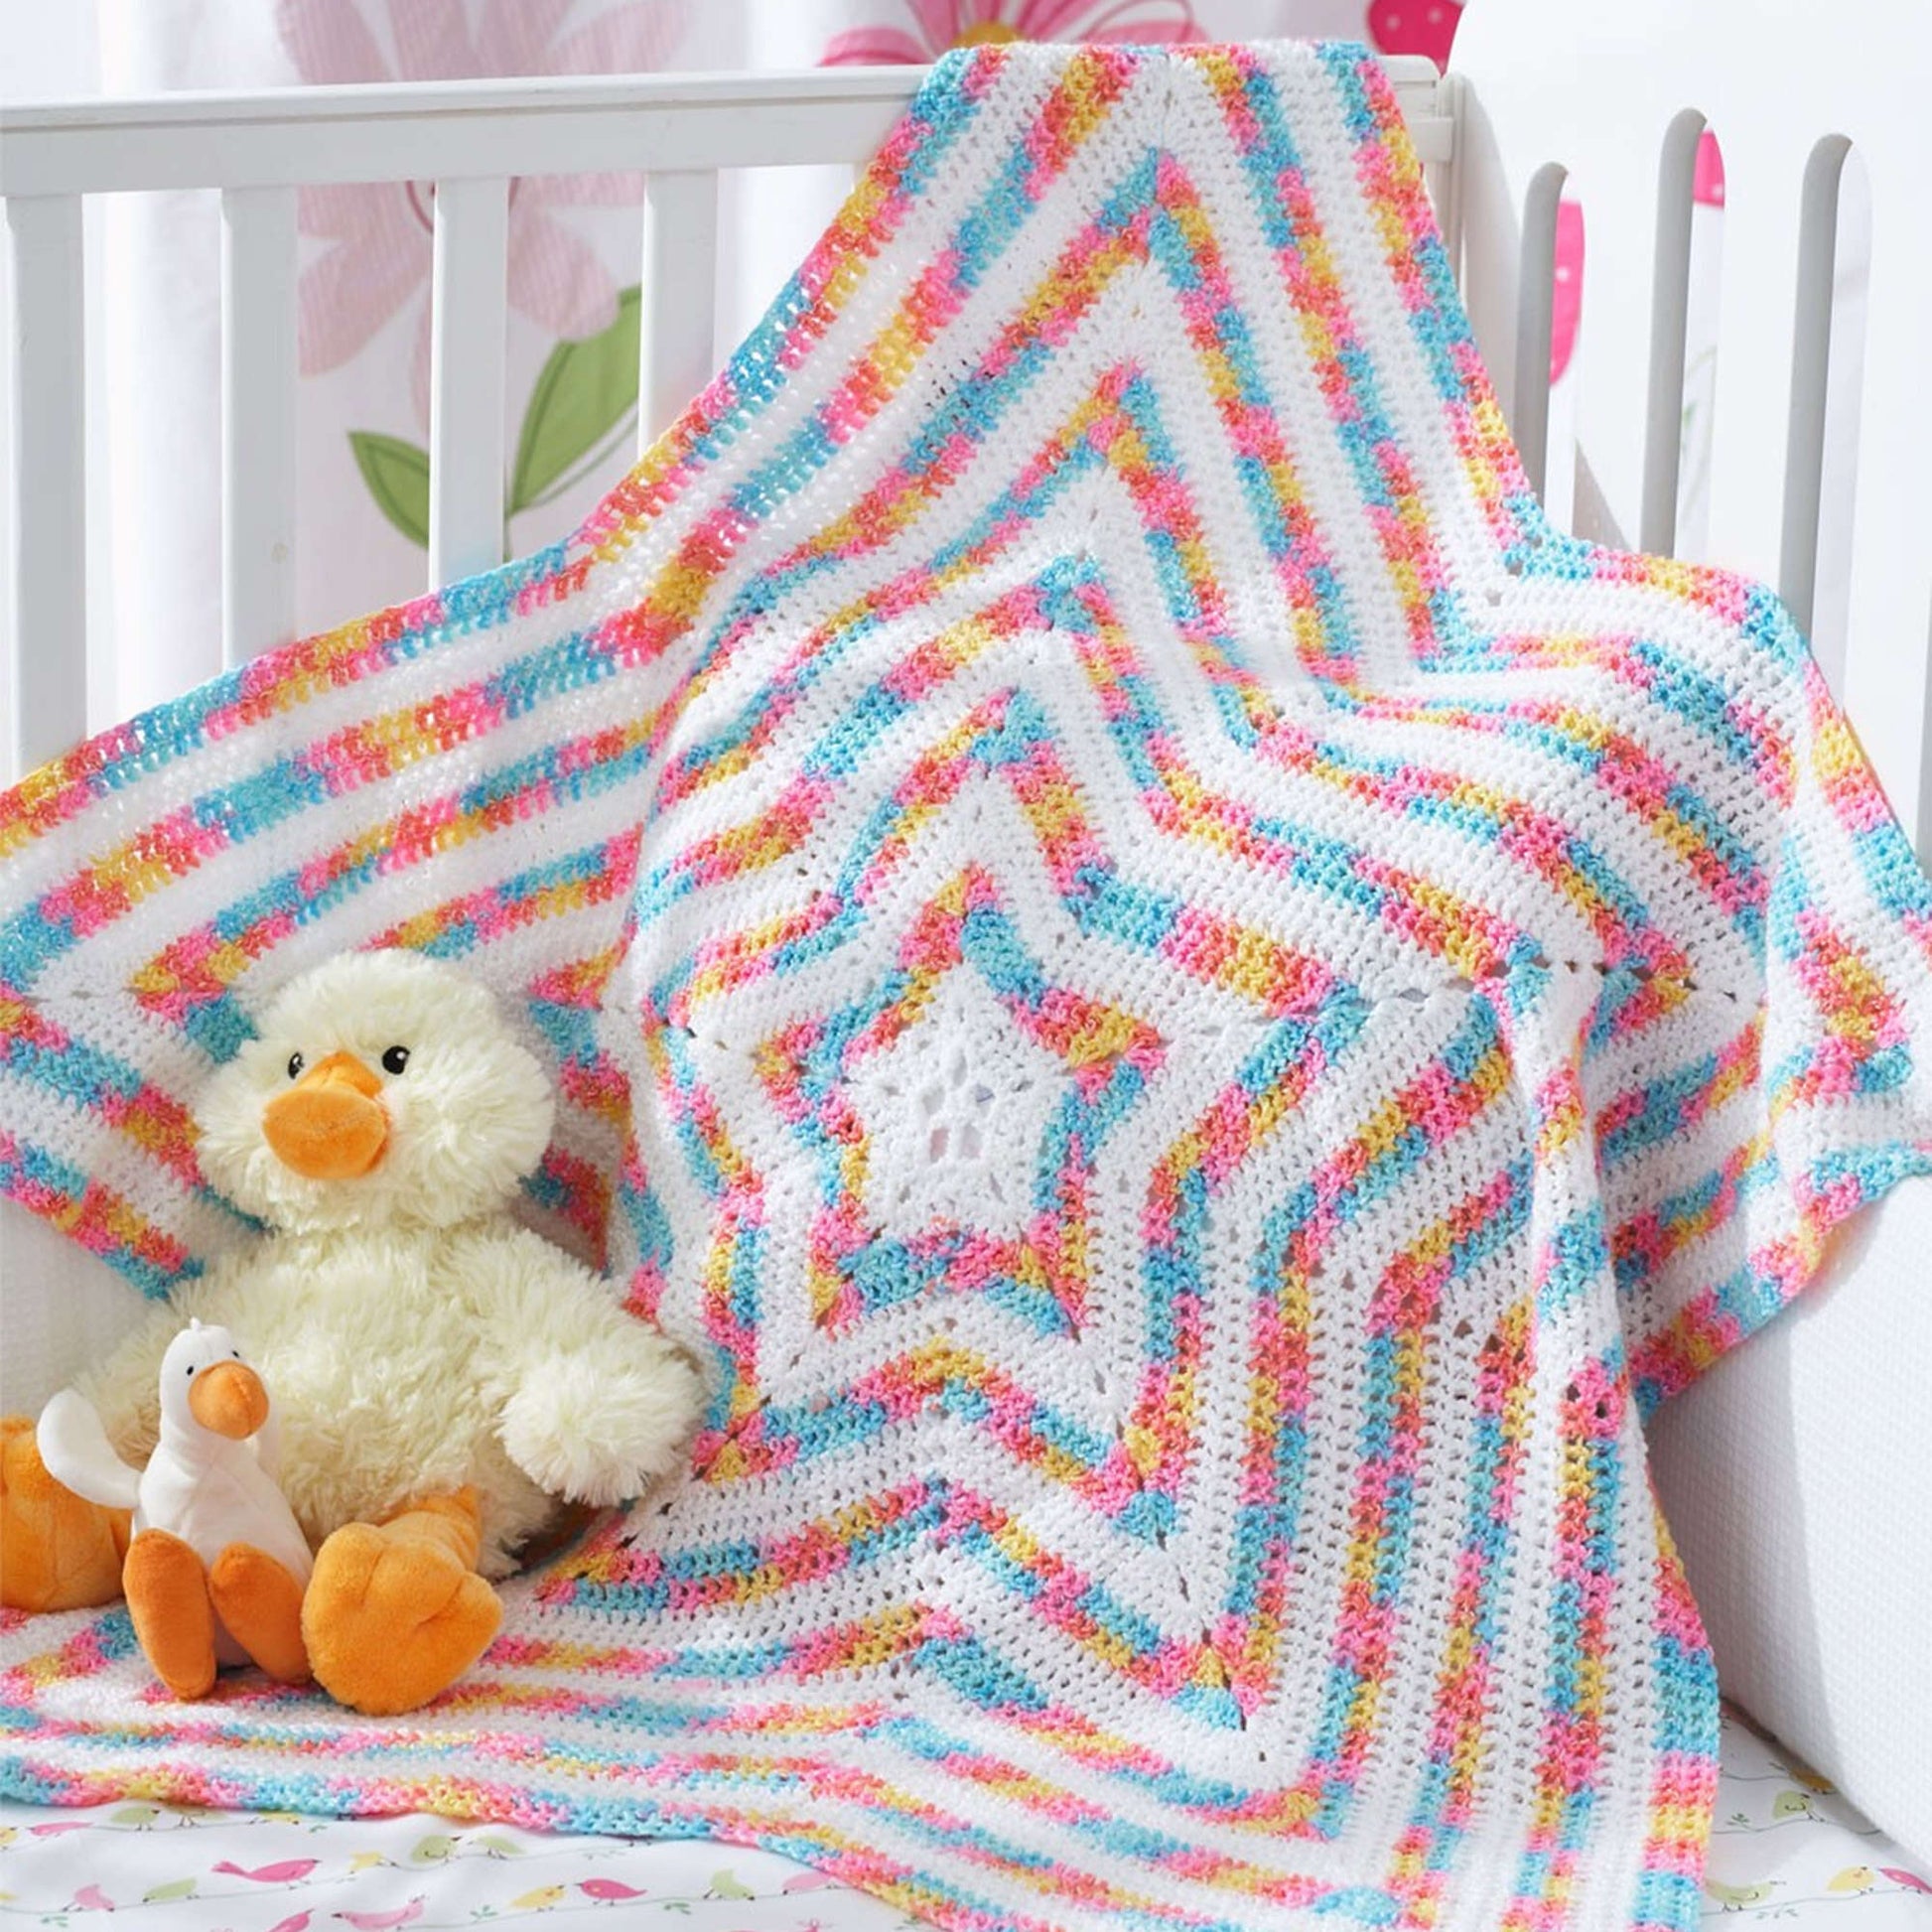 Bernat Star Crochet Blanket Crochet Blanket made in Bernat Baby Coordinates yarn